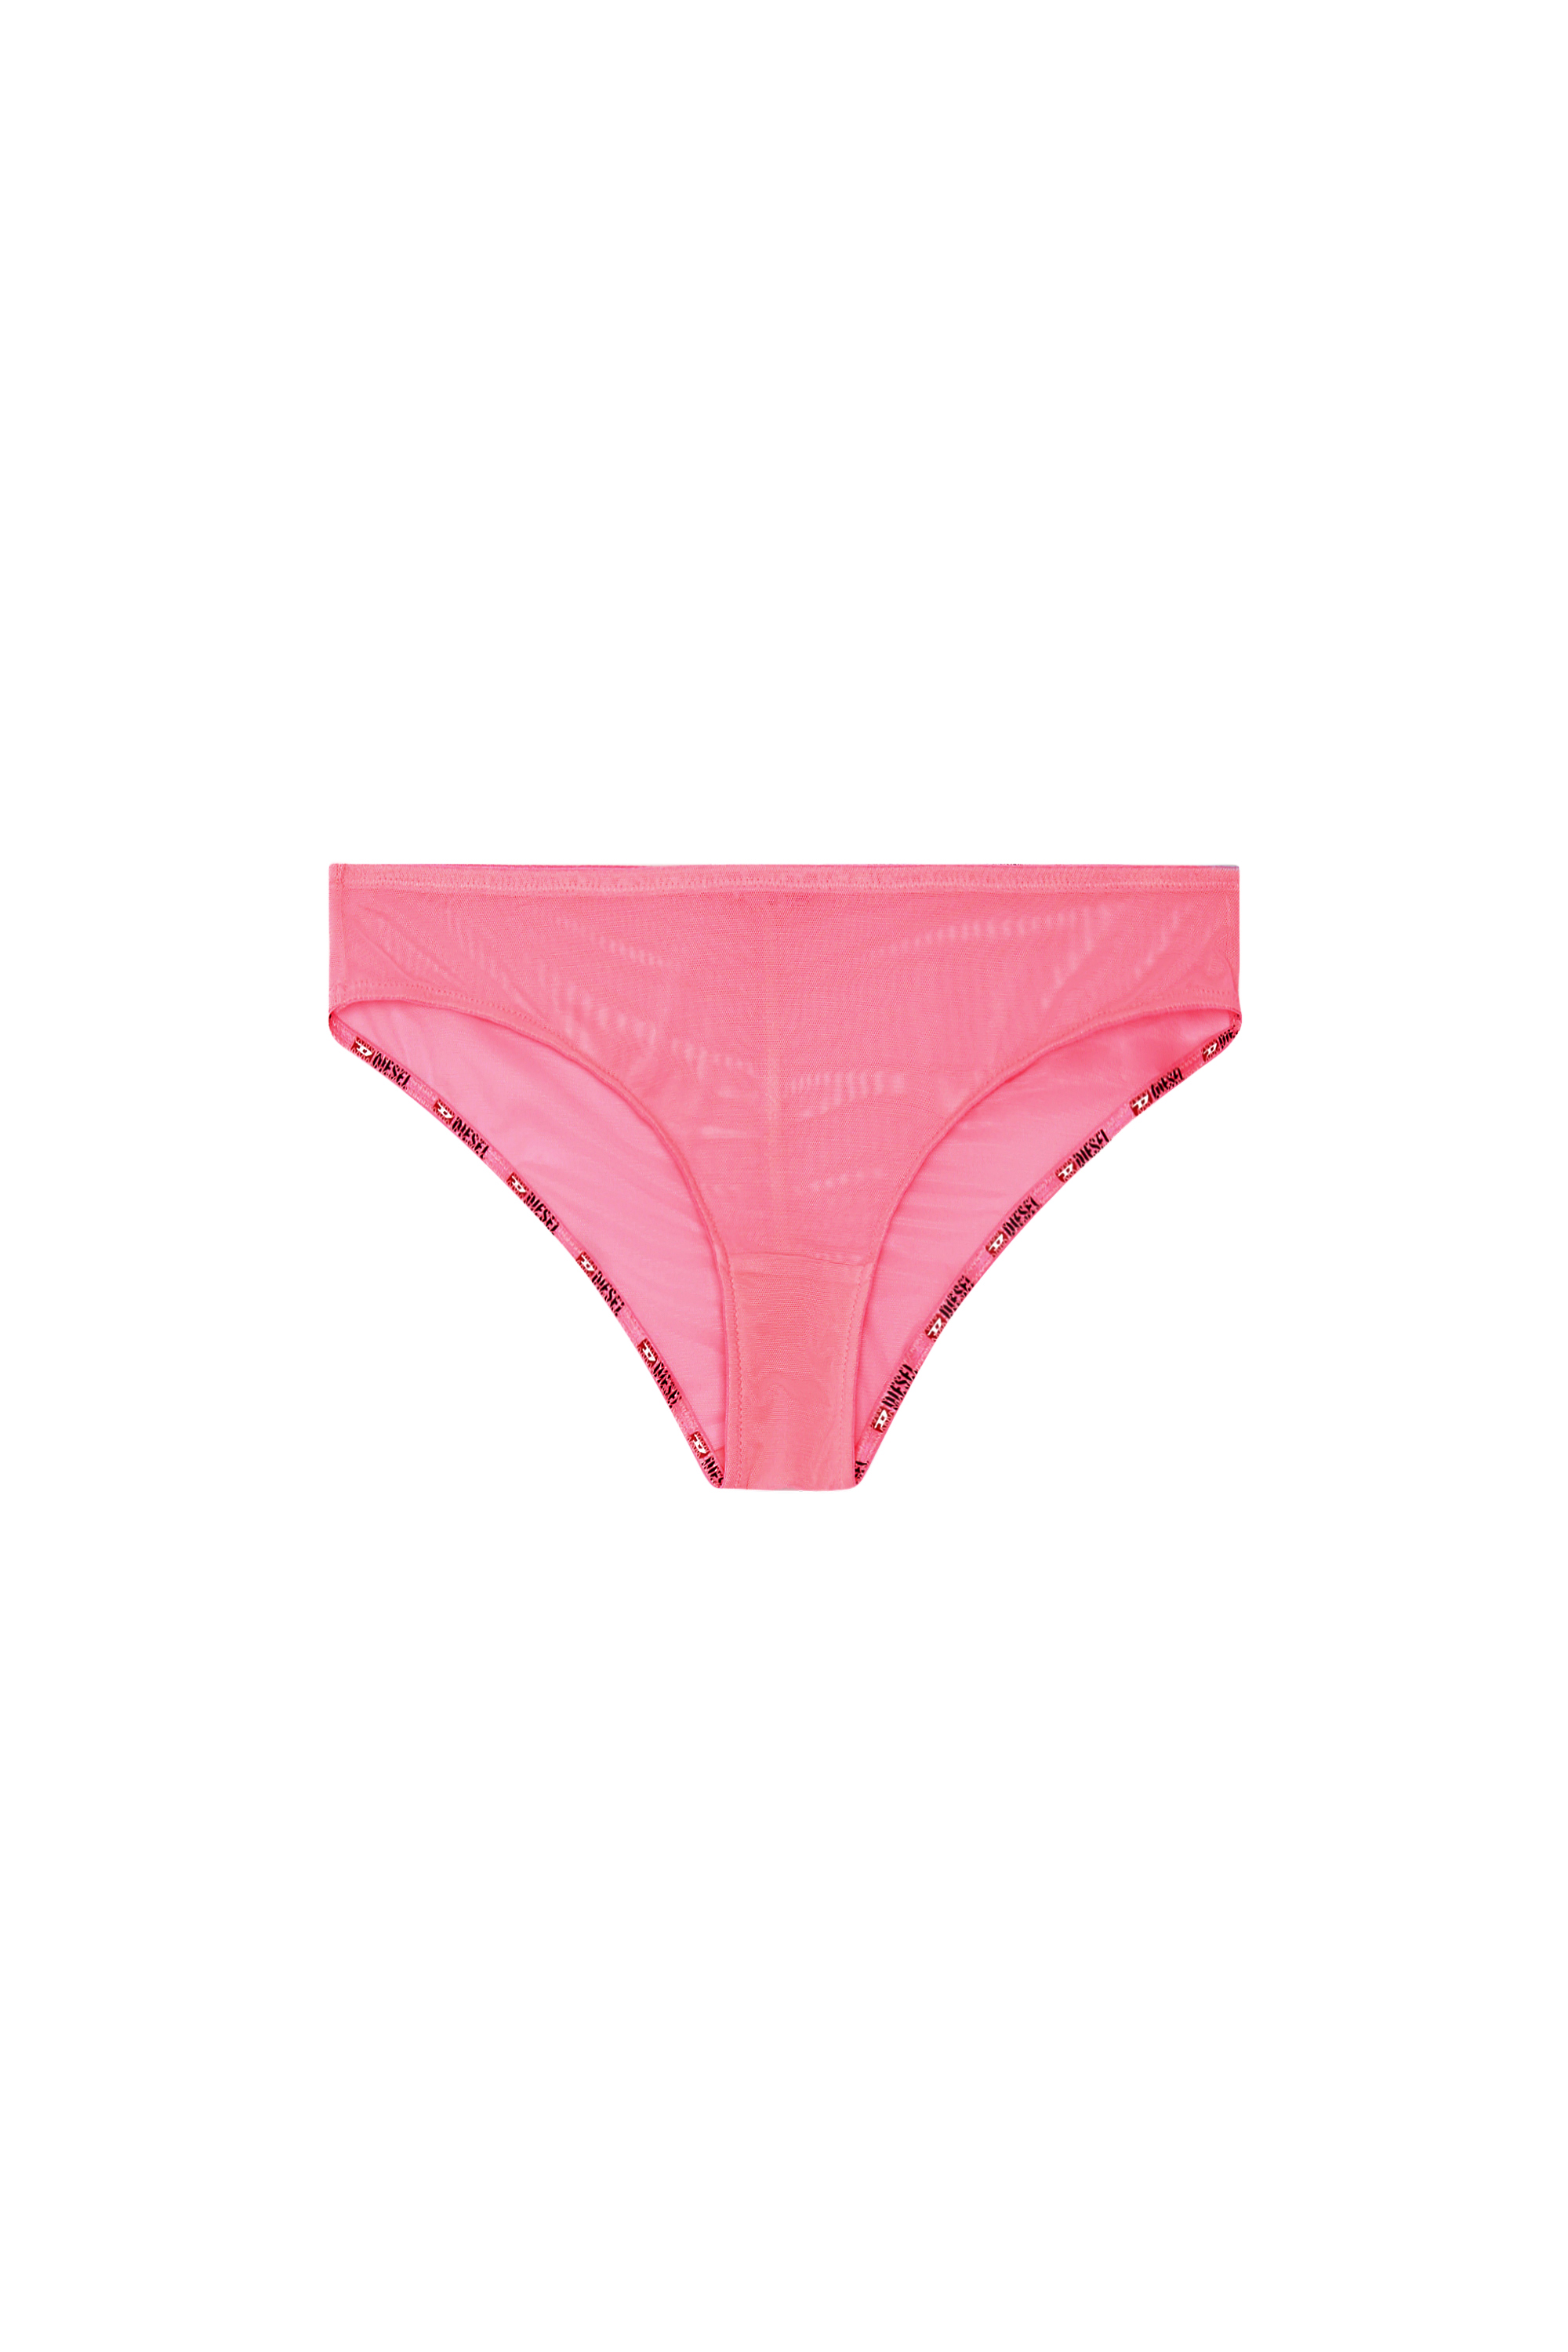 Buy Latest Bench Womens Underwear Online In Australia - OLA' 2PK